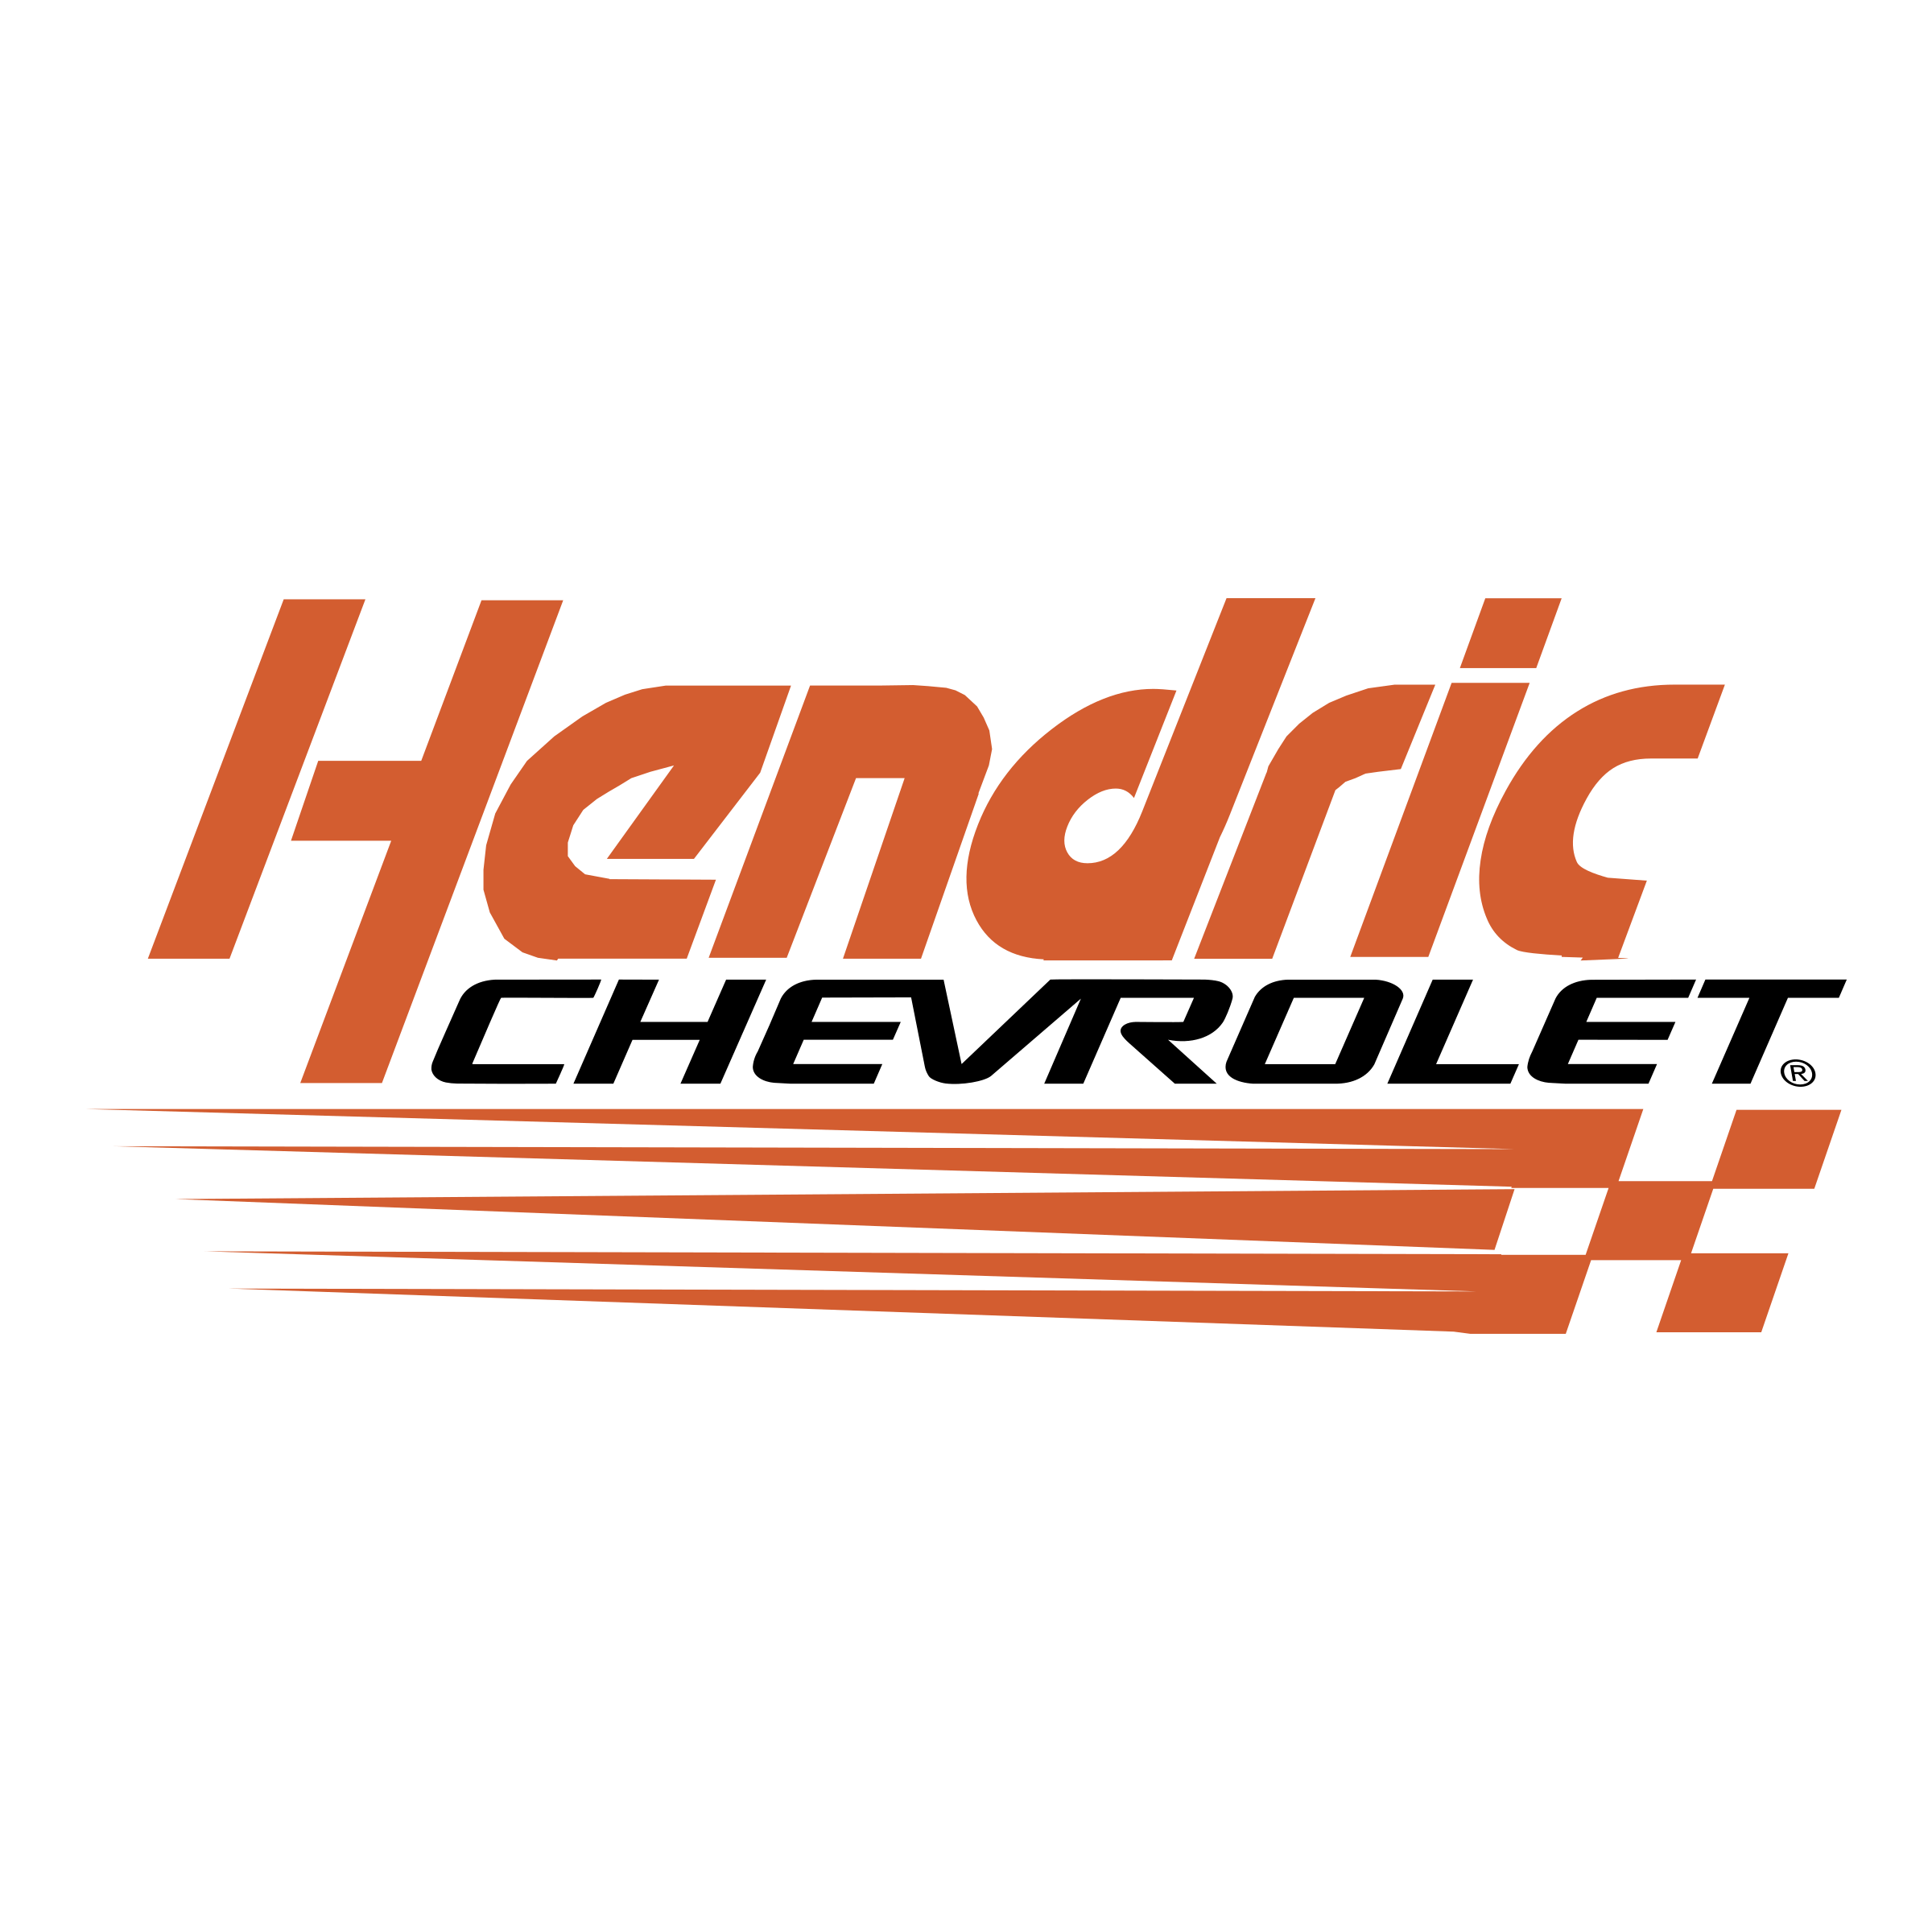 Hendrick Logo - Hendrick Chevrolet Logo PNG Transparent & SVG Vector